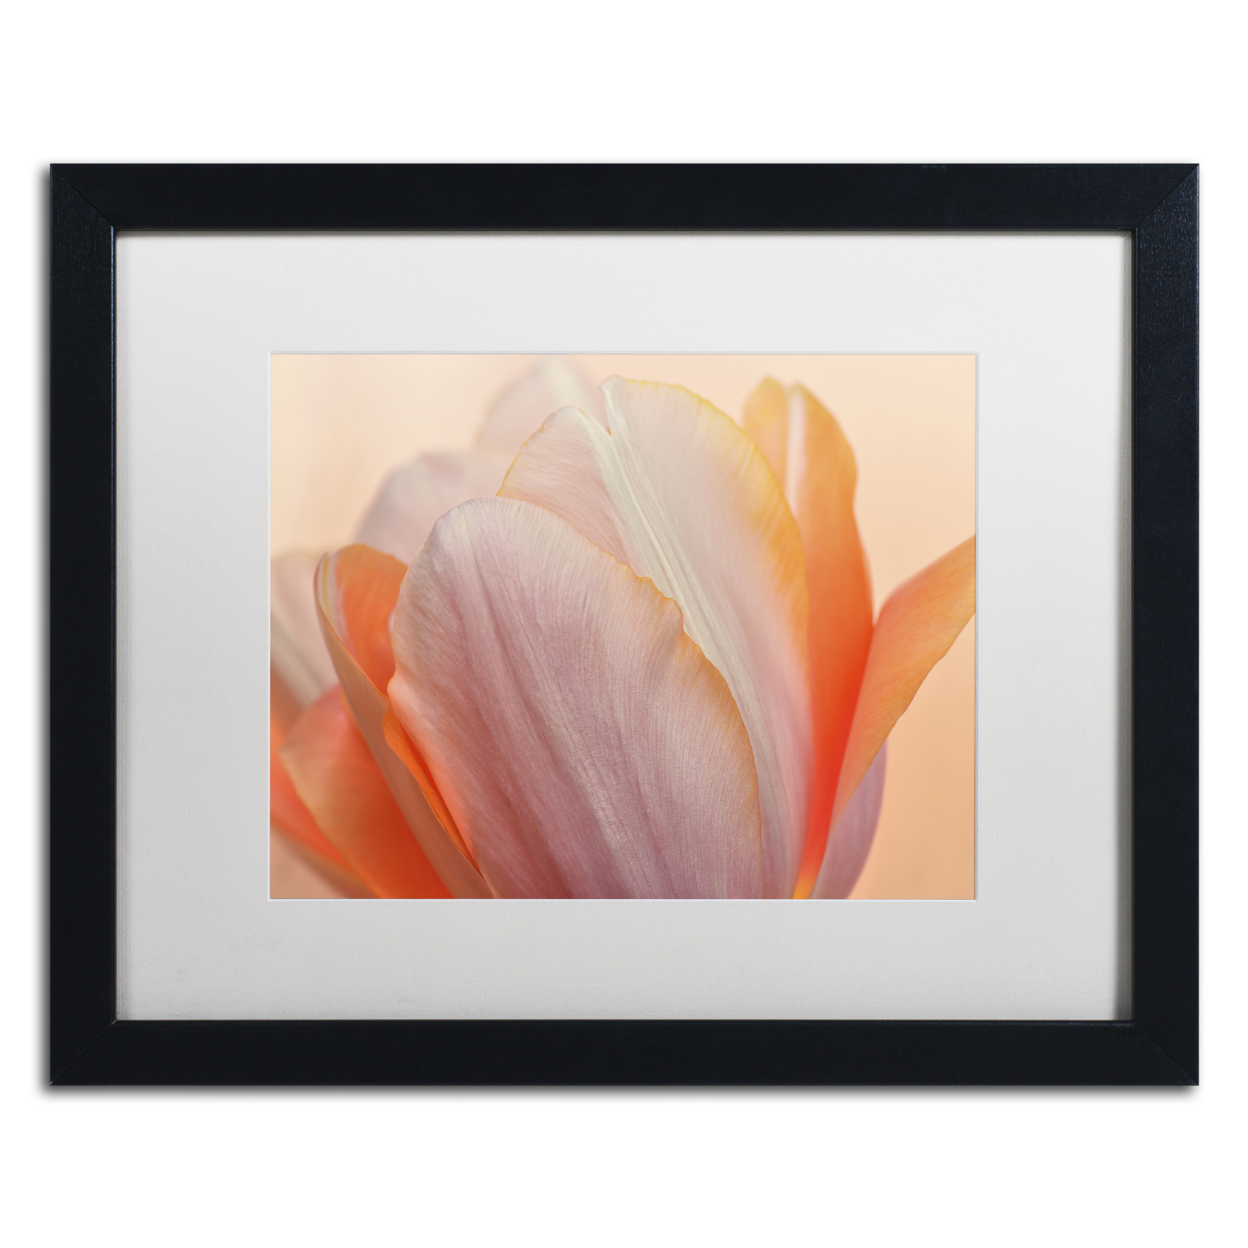 Cora Niele 'Orange Glowing Tulip' Black Wooden Framed Art 18 X 22 Inches